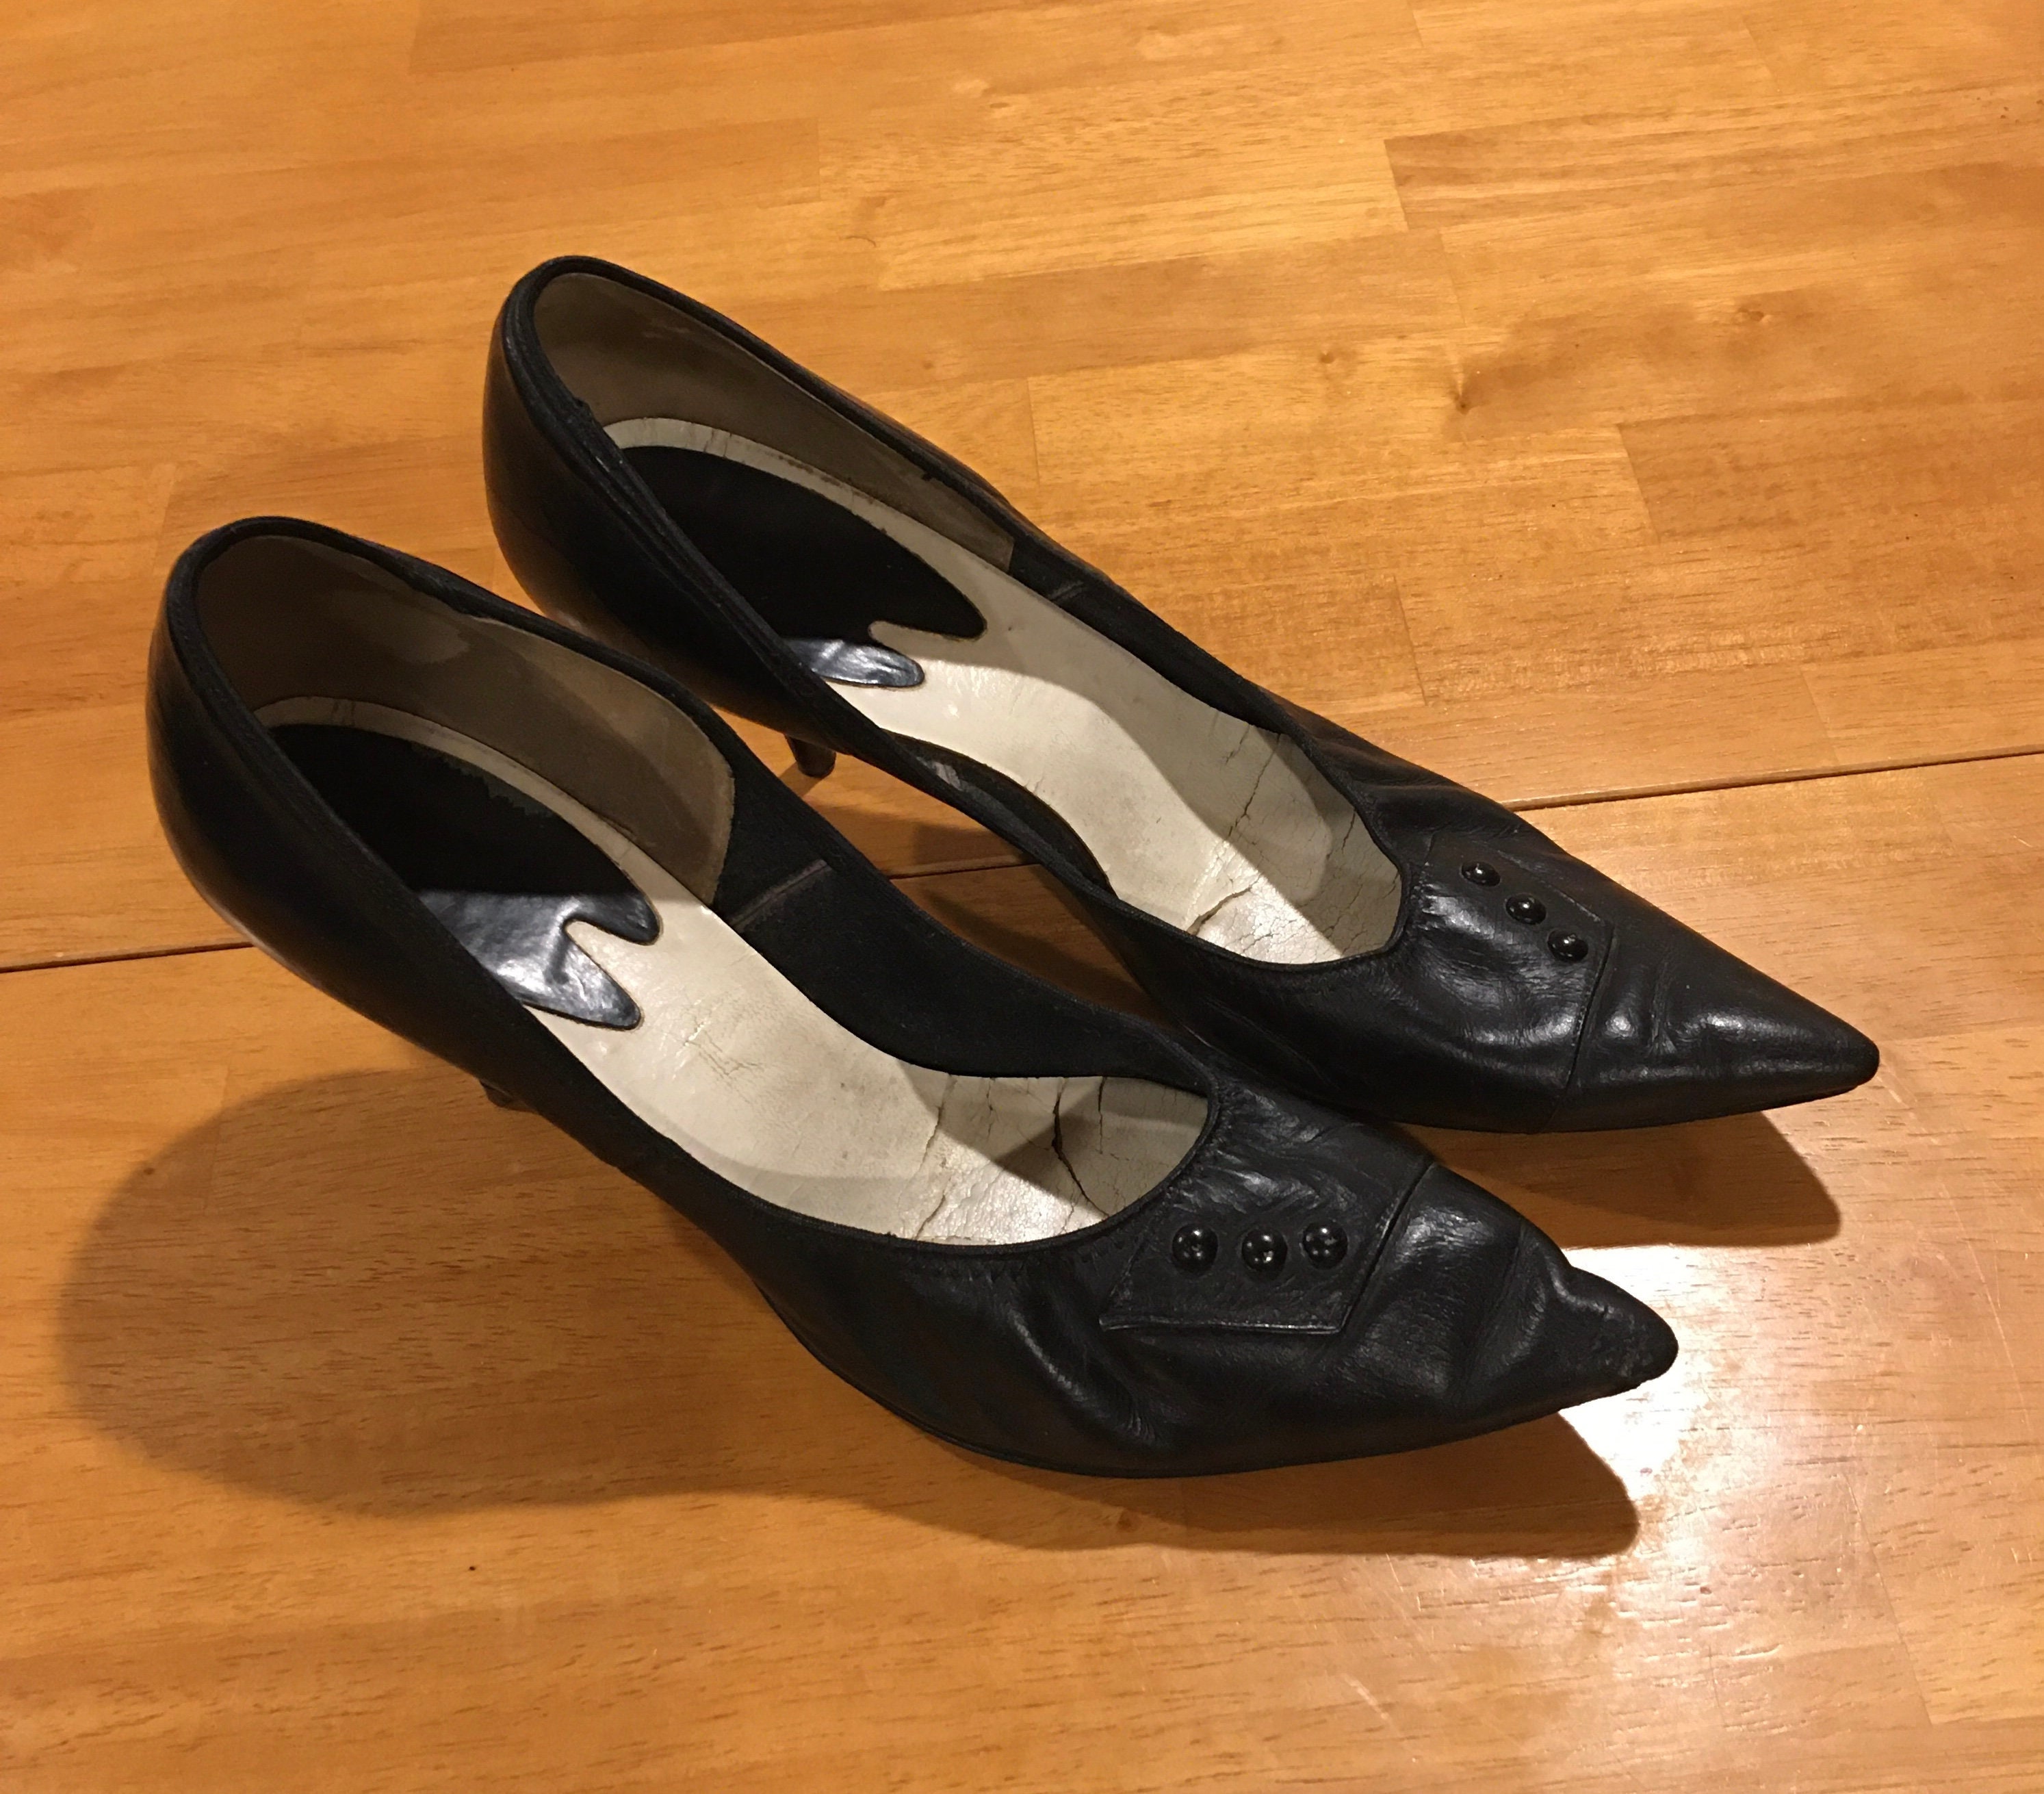 SALE Boutaccelli Chanel Mary Jane Shoe – La Elegante Shoes